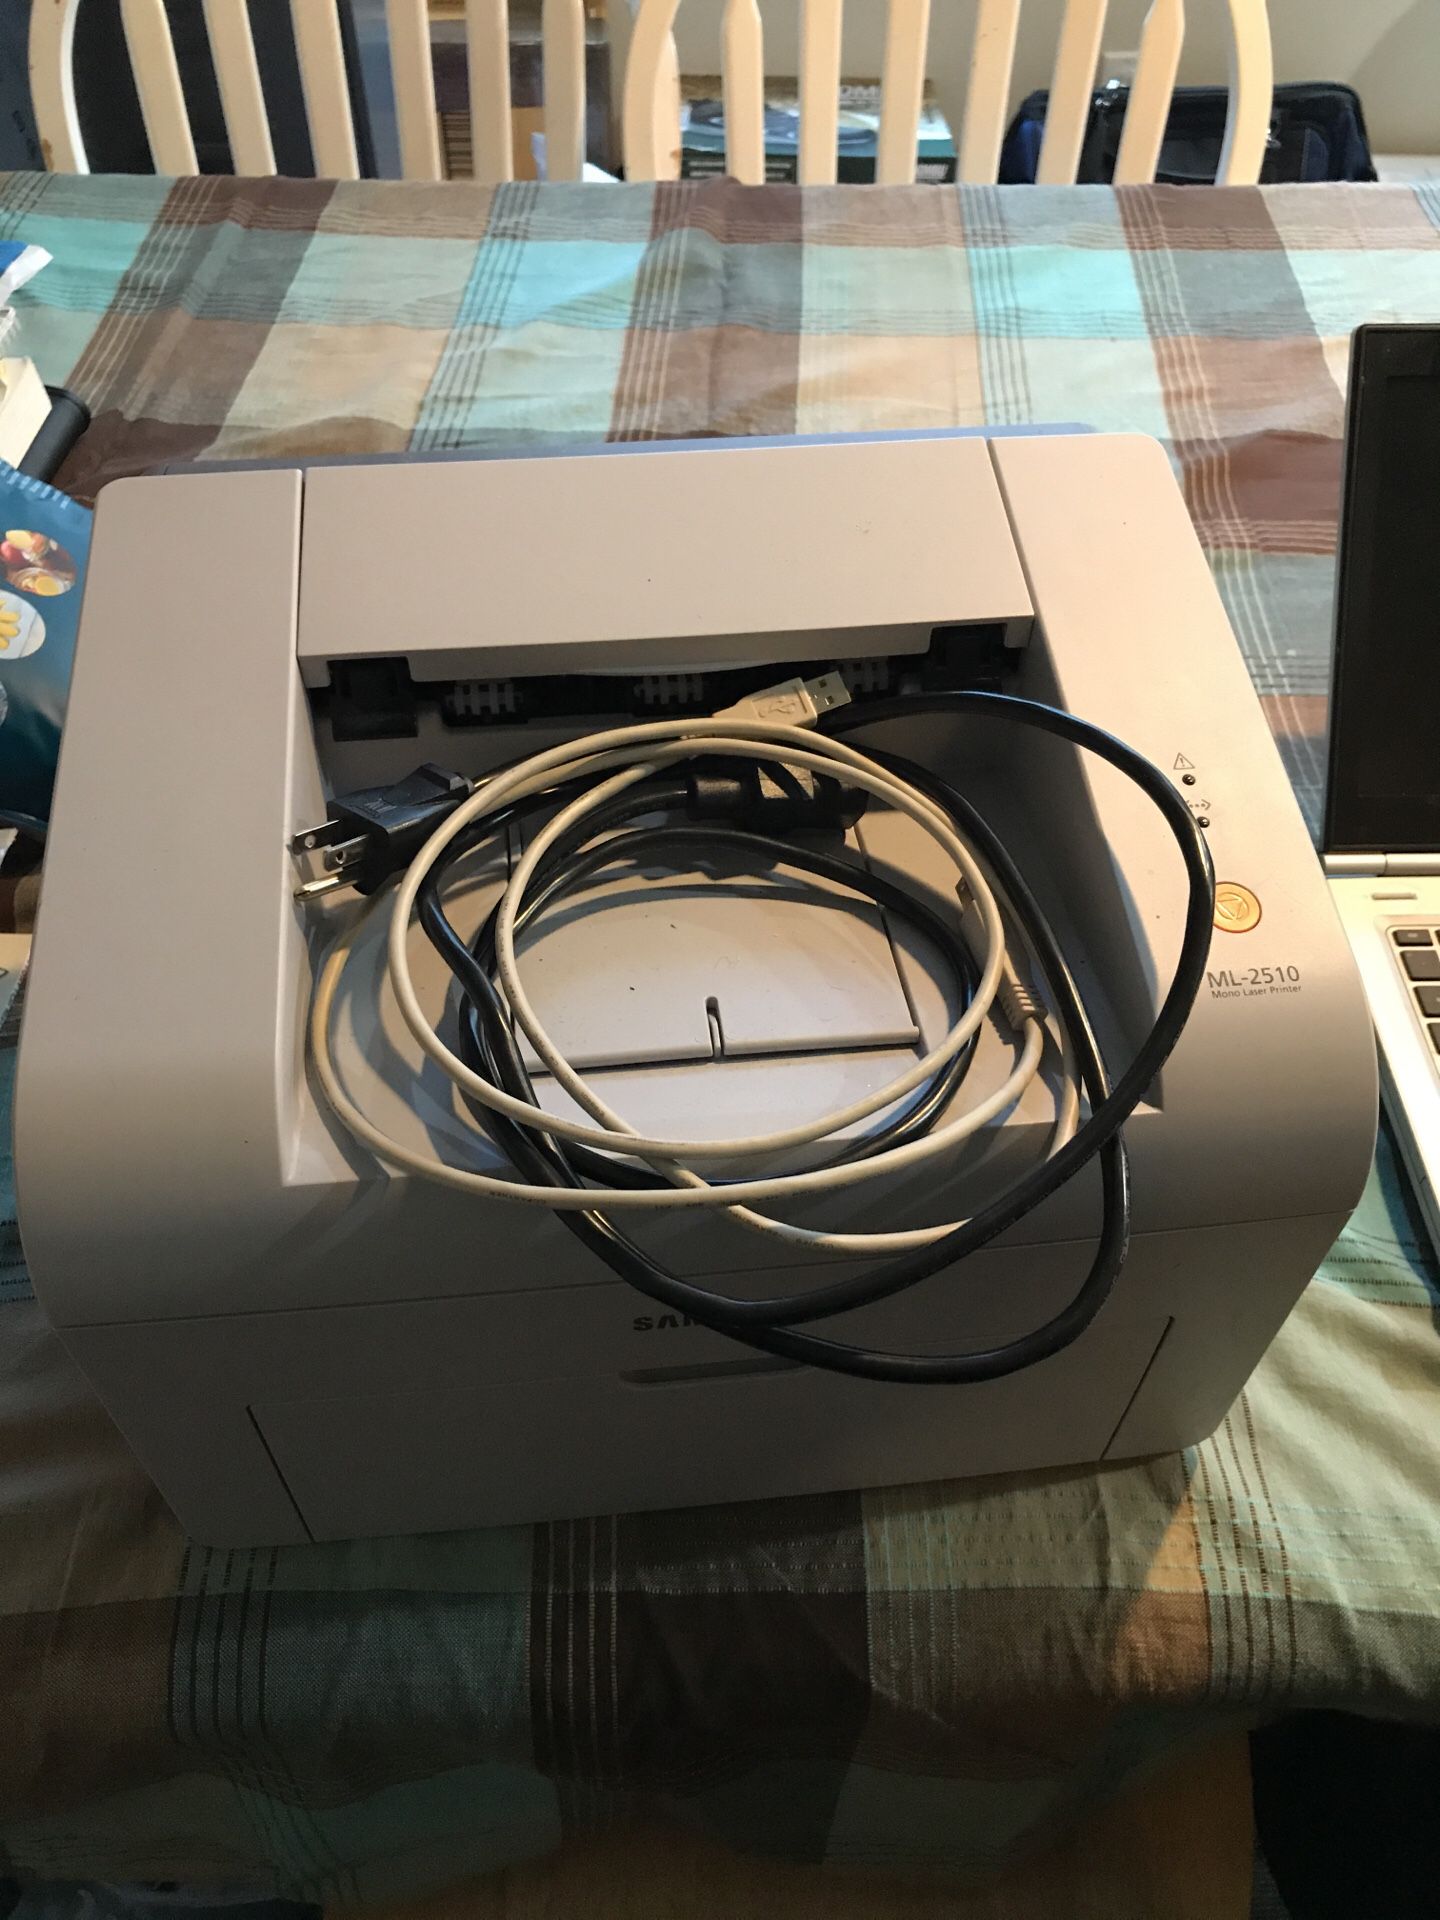 Samsung ML-2510 laser printer not working FREE